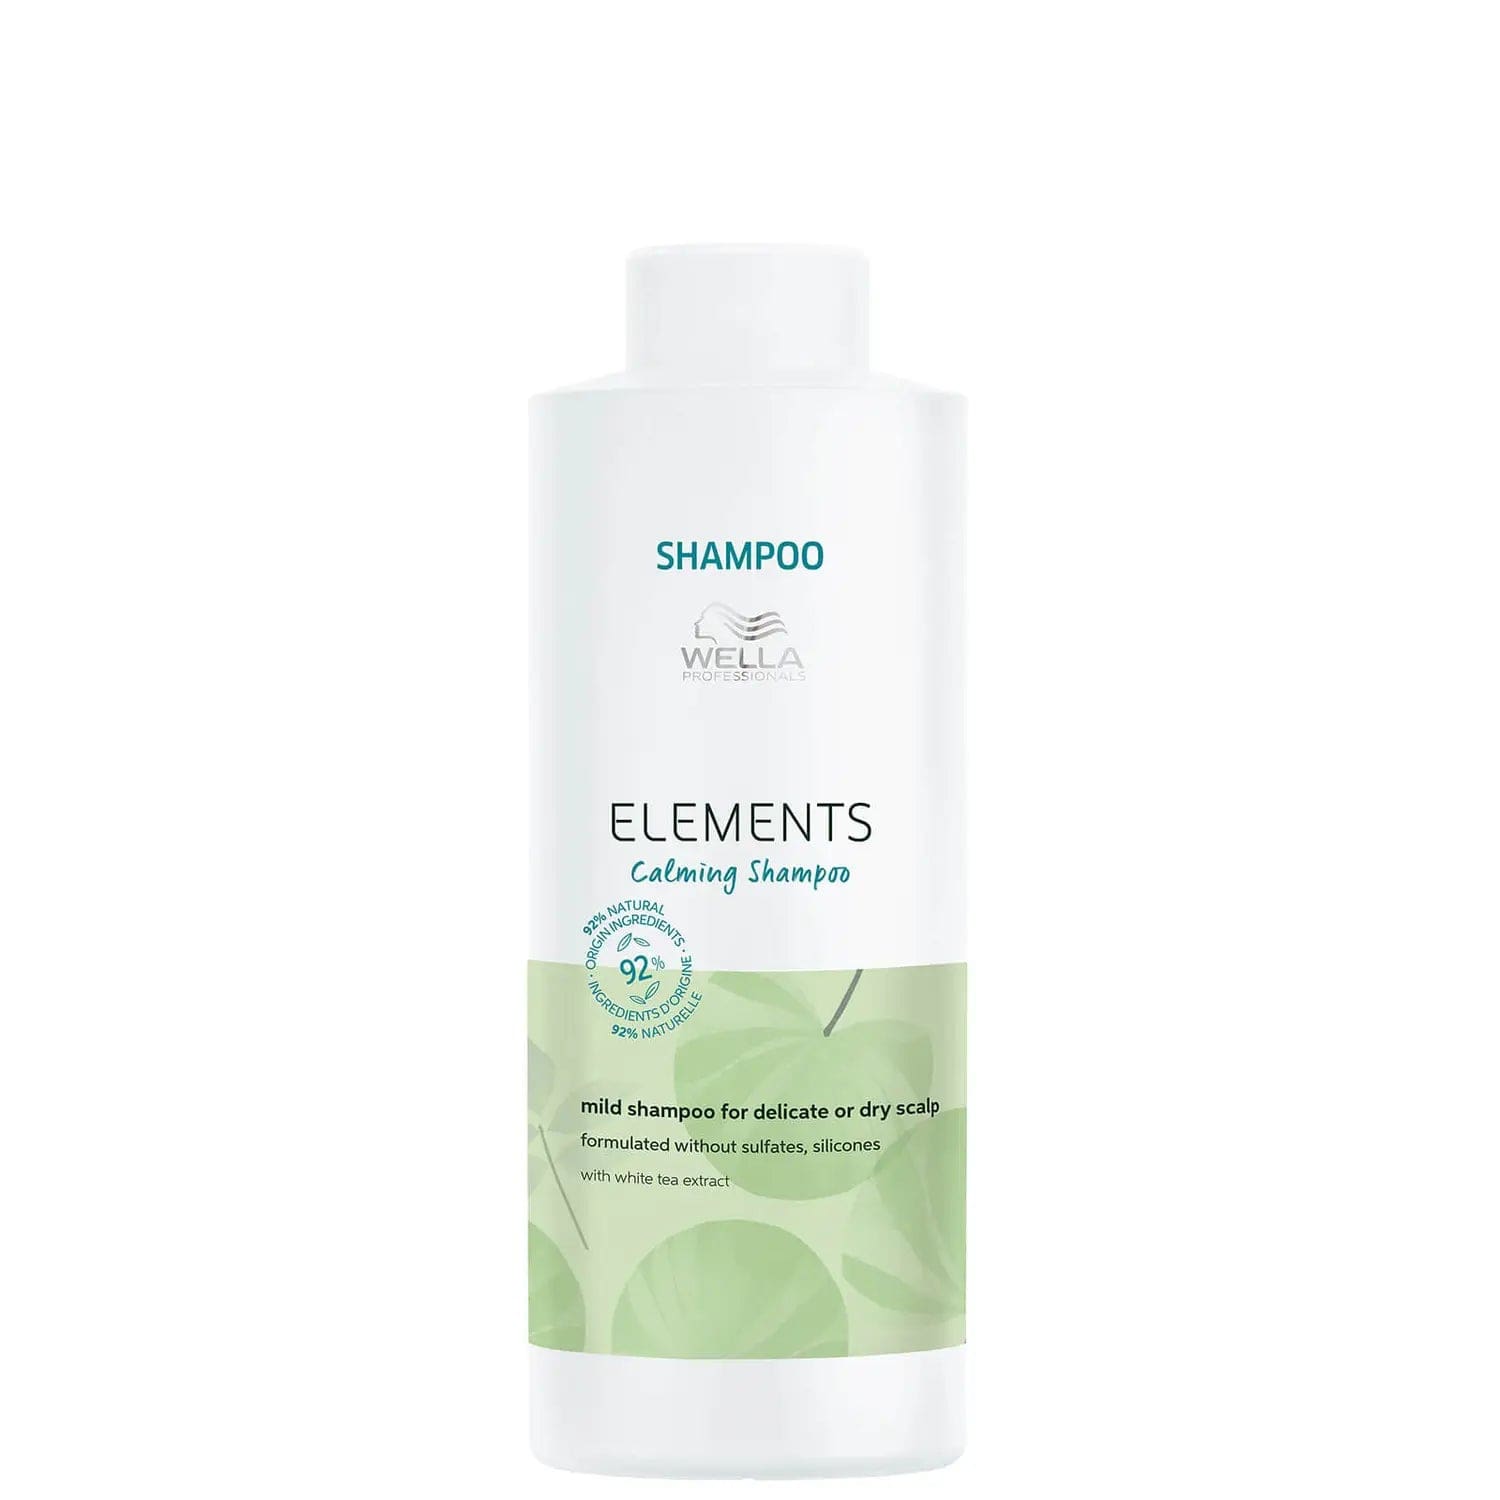 Wella Champú ELEMENTS Calming Shampoo 1000ml Roberta Beauty Club